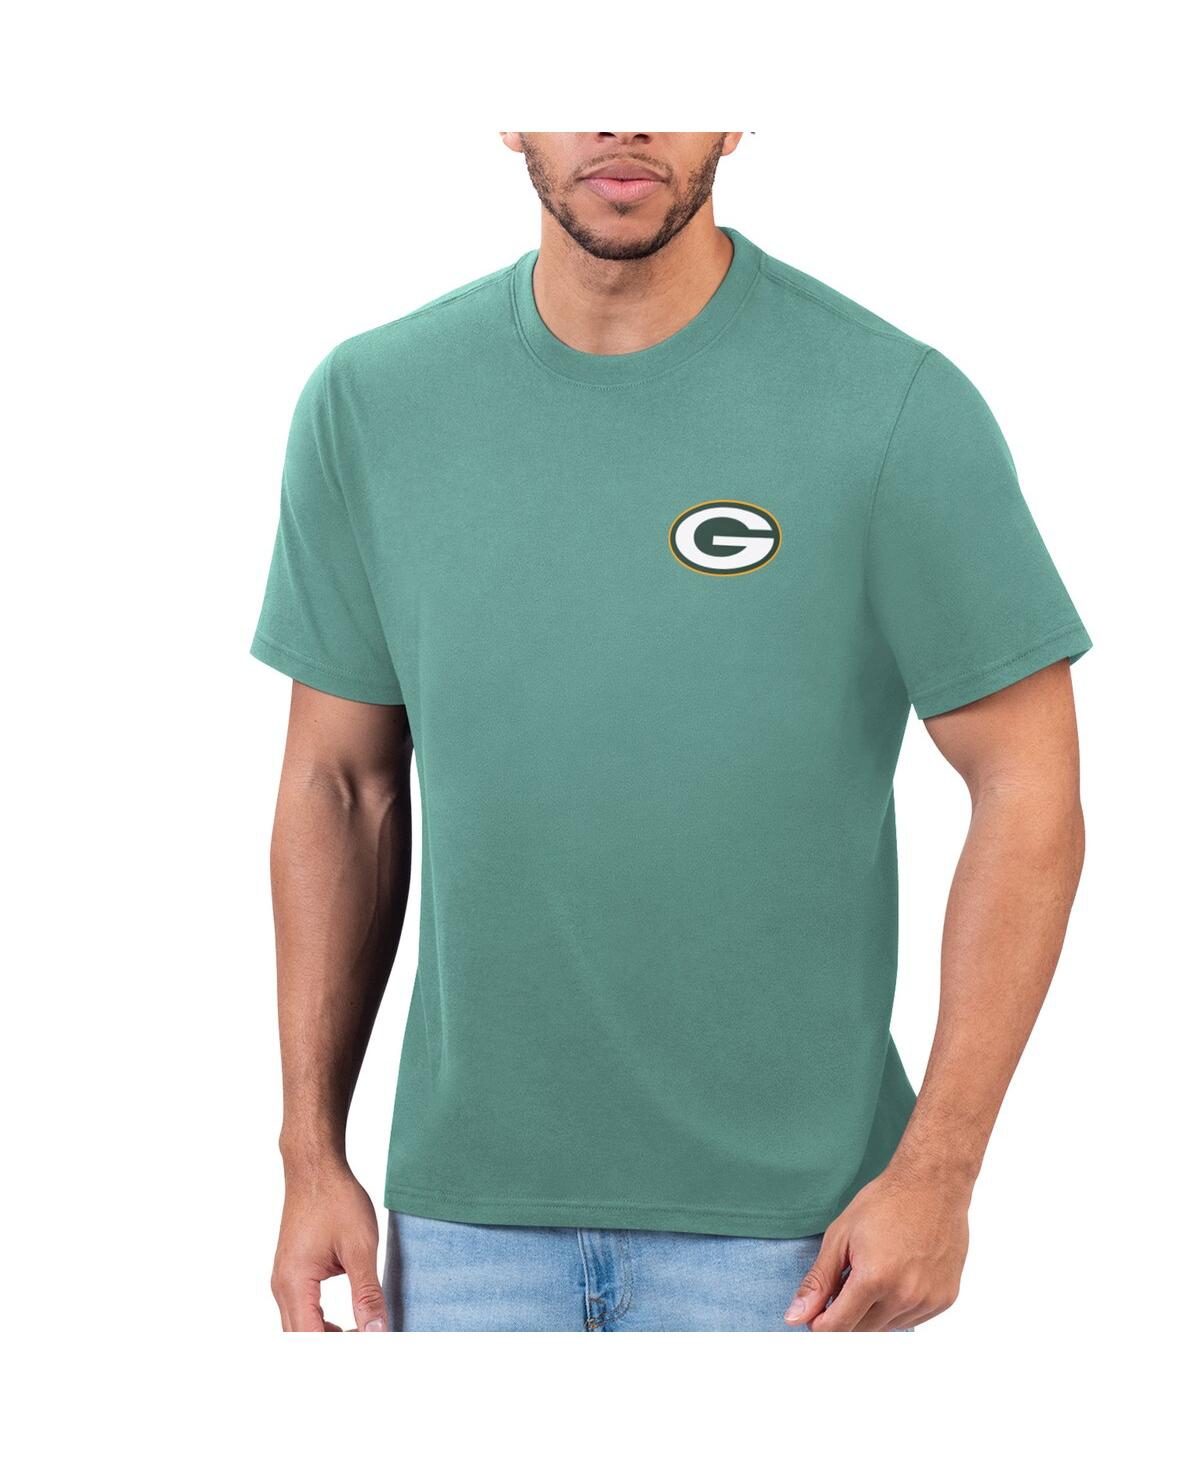 Men's Margaritaville Mint Green Bay Packers T-shirt - Mint